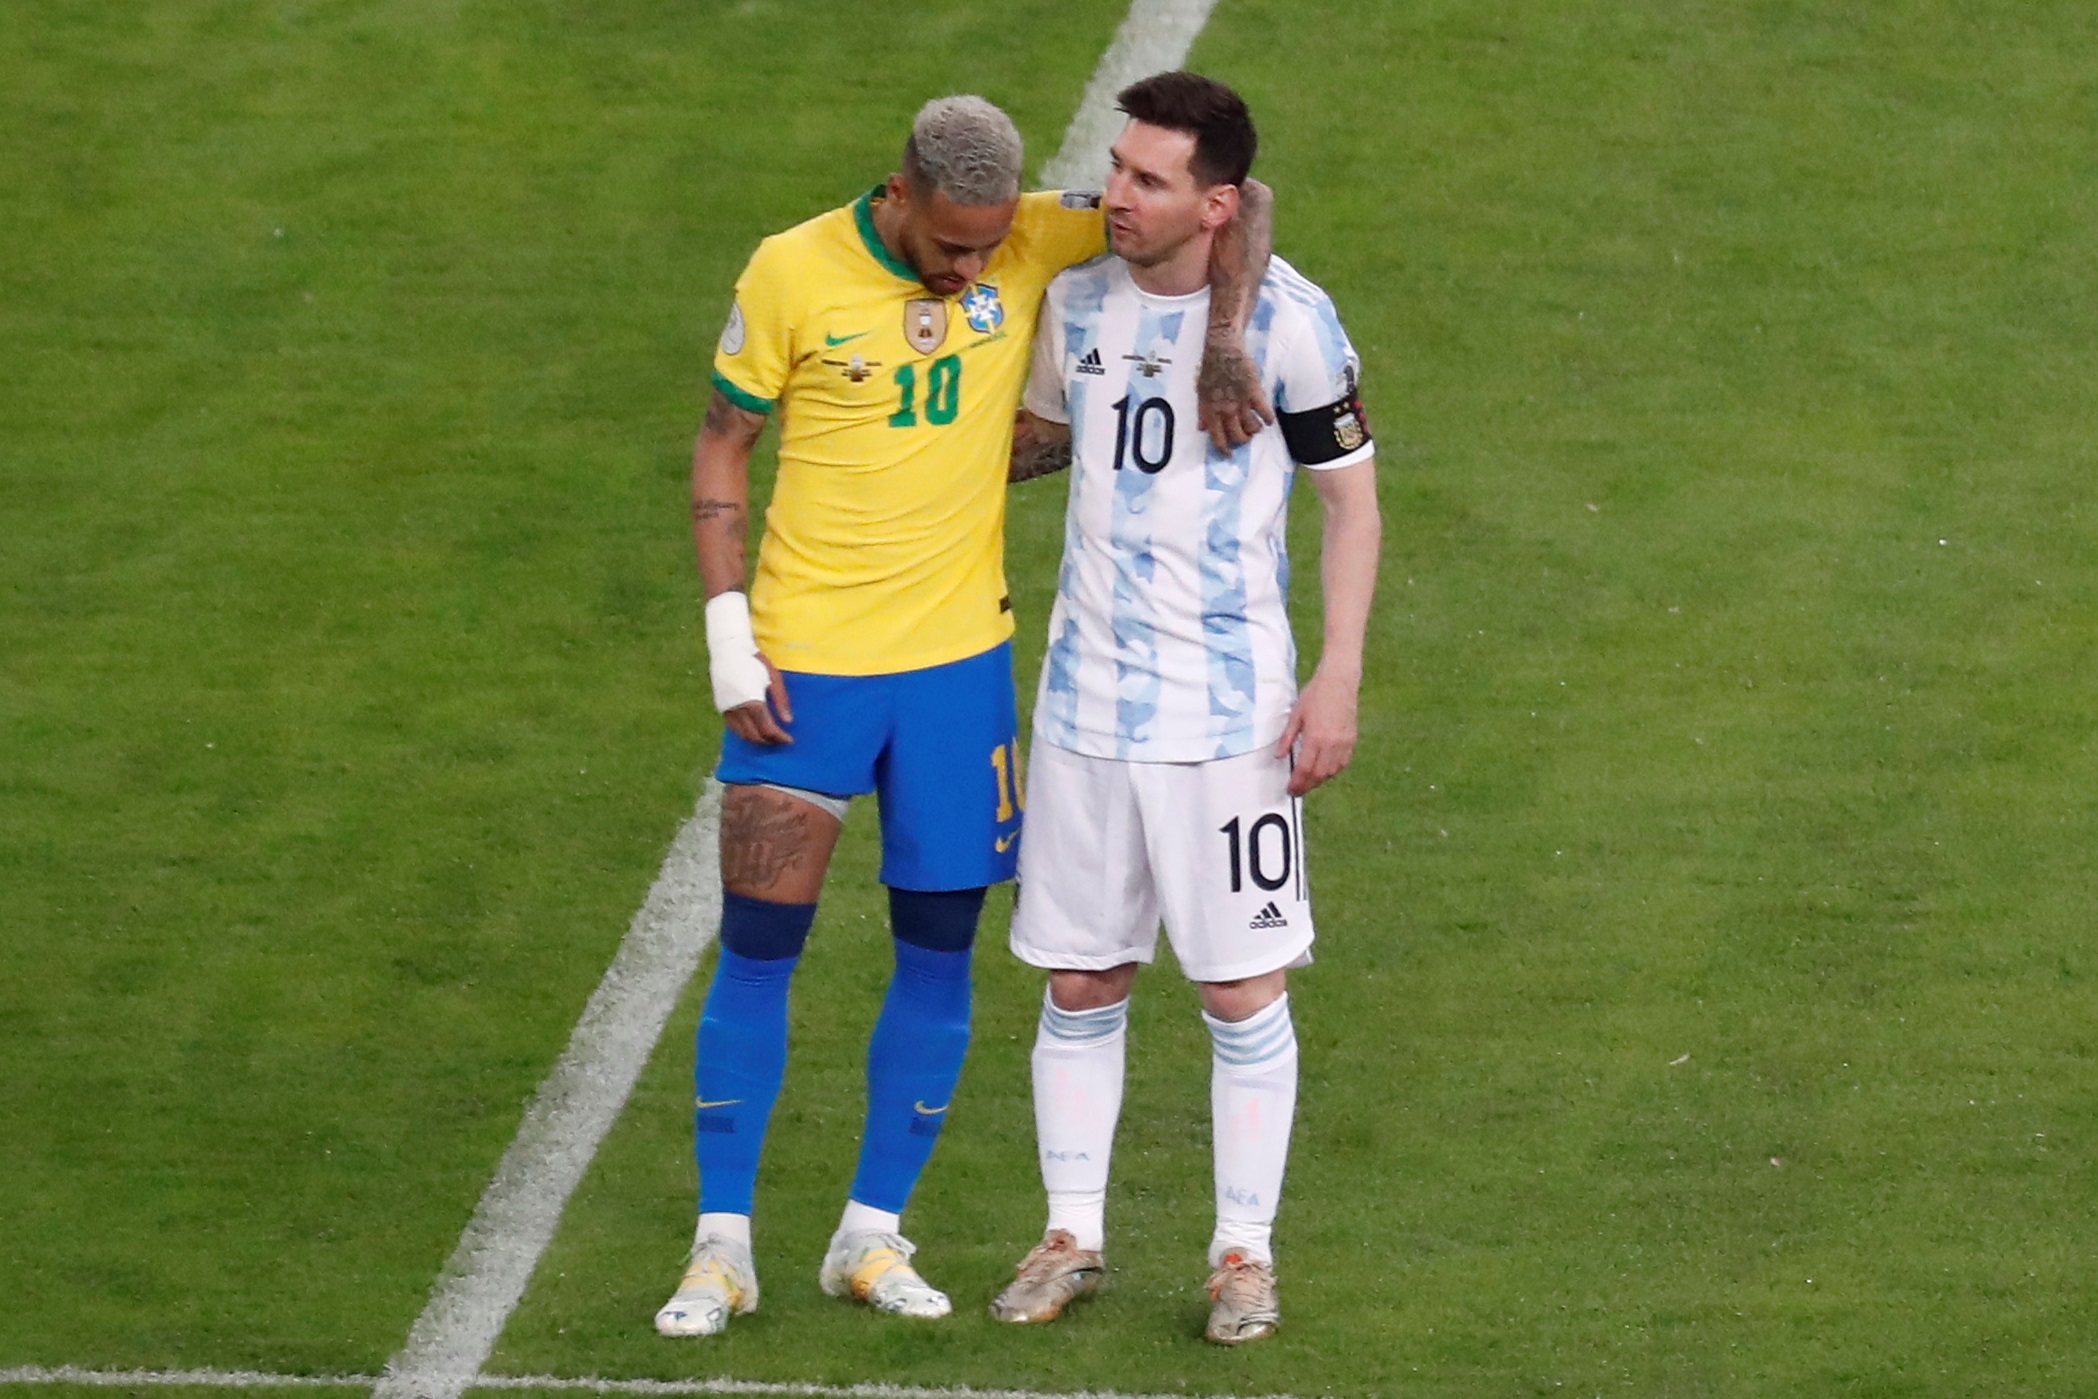 Brasil x Argentina deve ser 'última dança' de Messi em solo